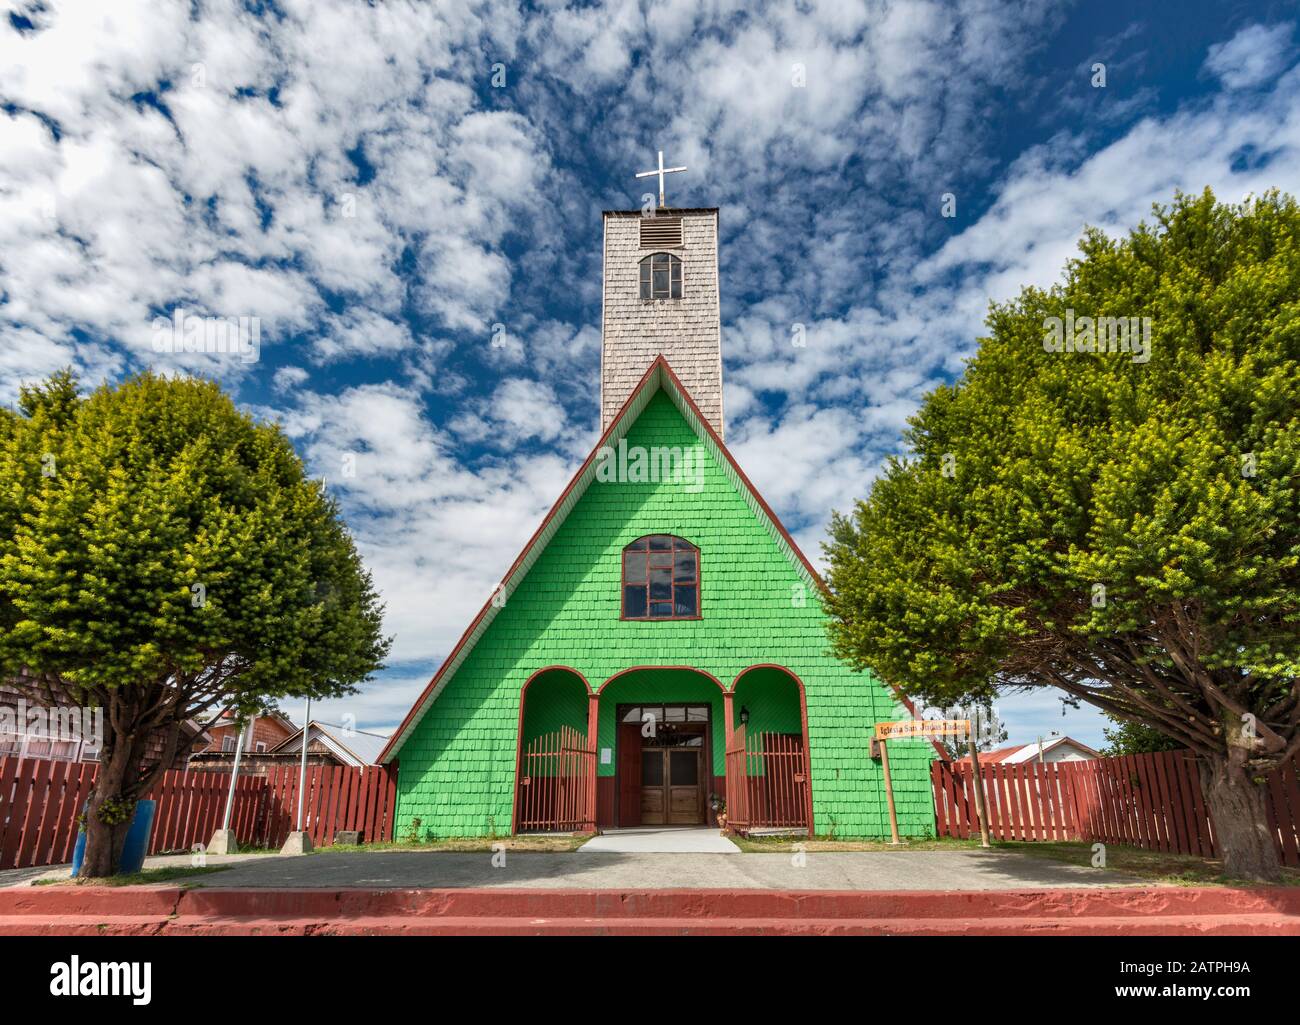 Iglesia Santo Judas Tadeo, shingled wooden church in town of Curaco de Velez at Isla Quinchao, Chiloe Archipelago, Los Lagos Region, Patagonia, Chile Stock Photo